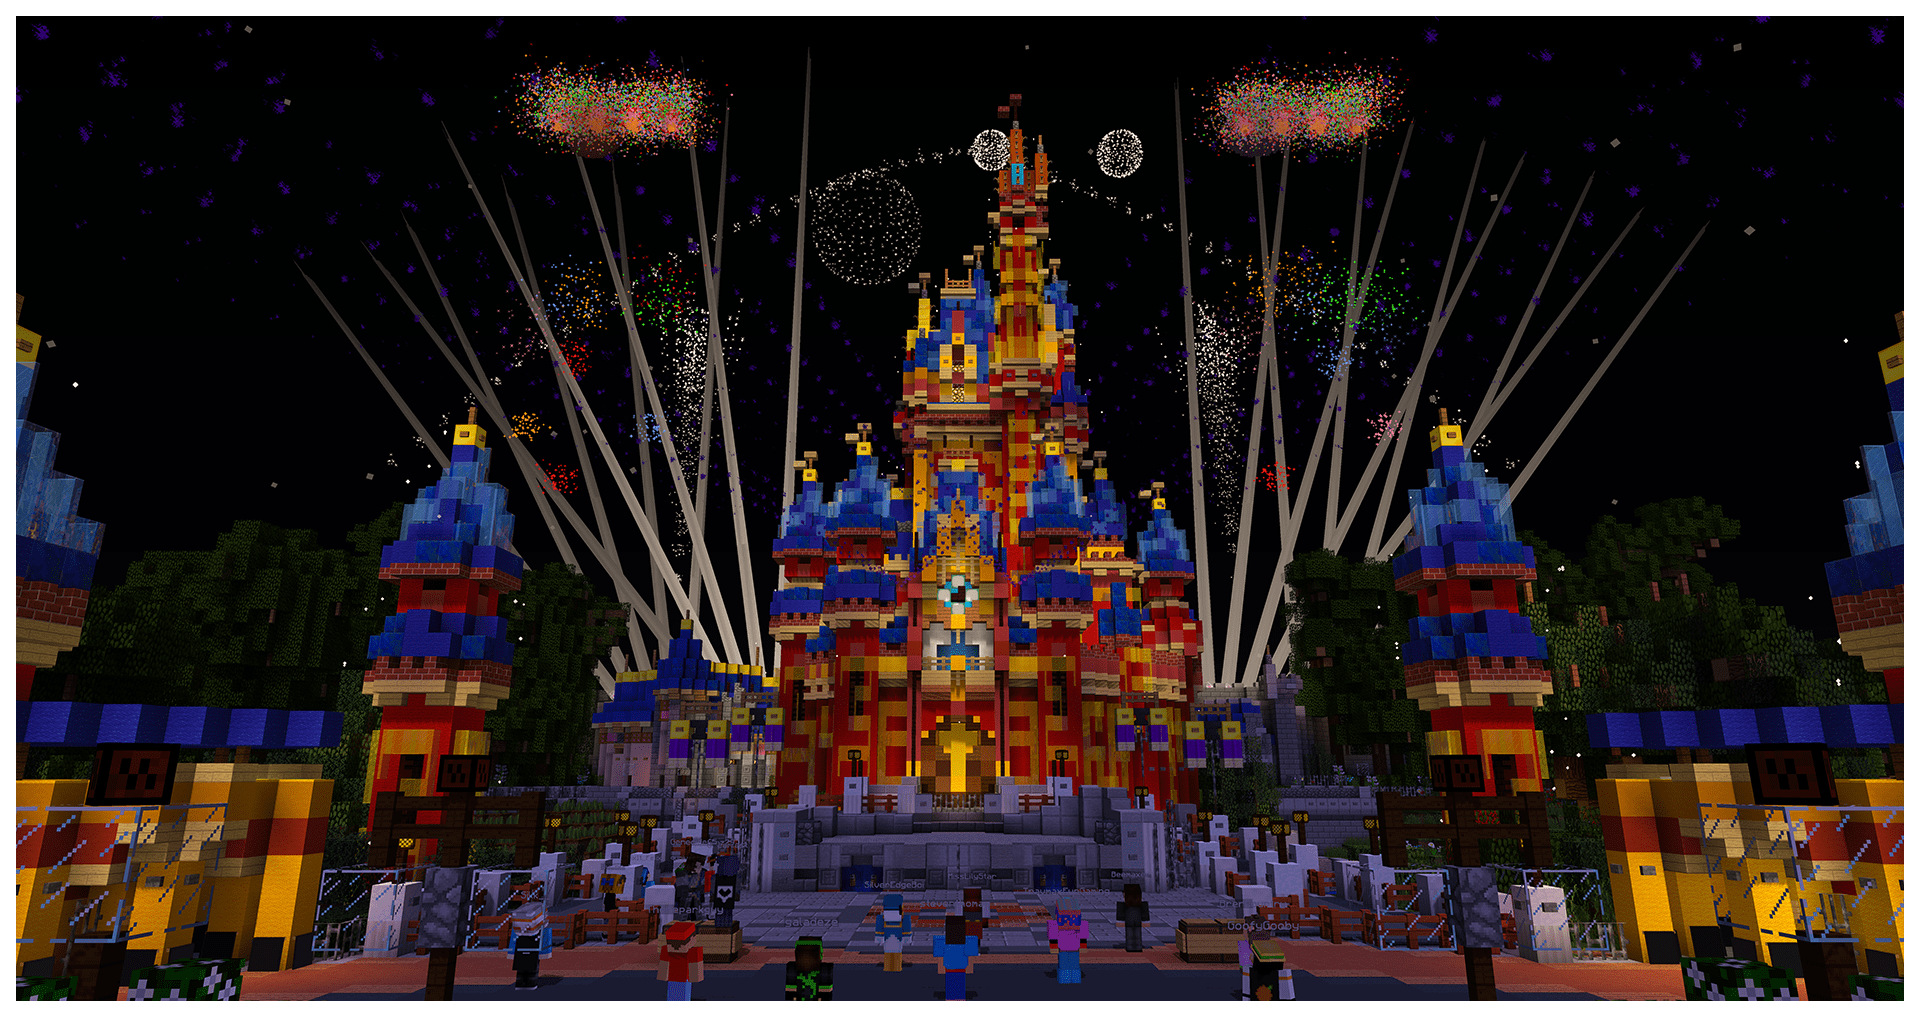 Minecraft Disneyland. Image from MC Parks.